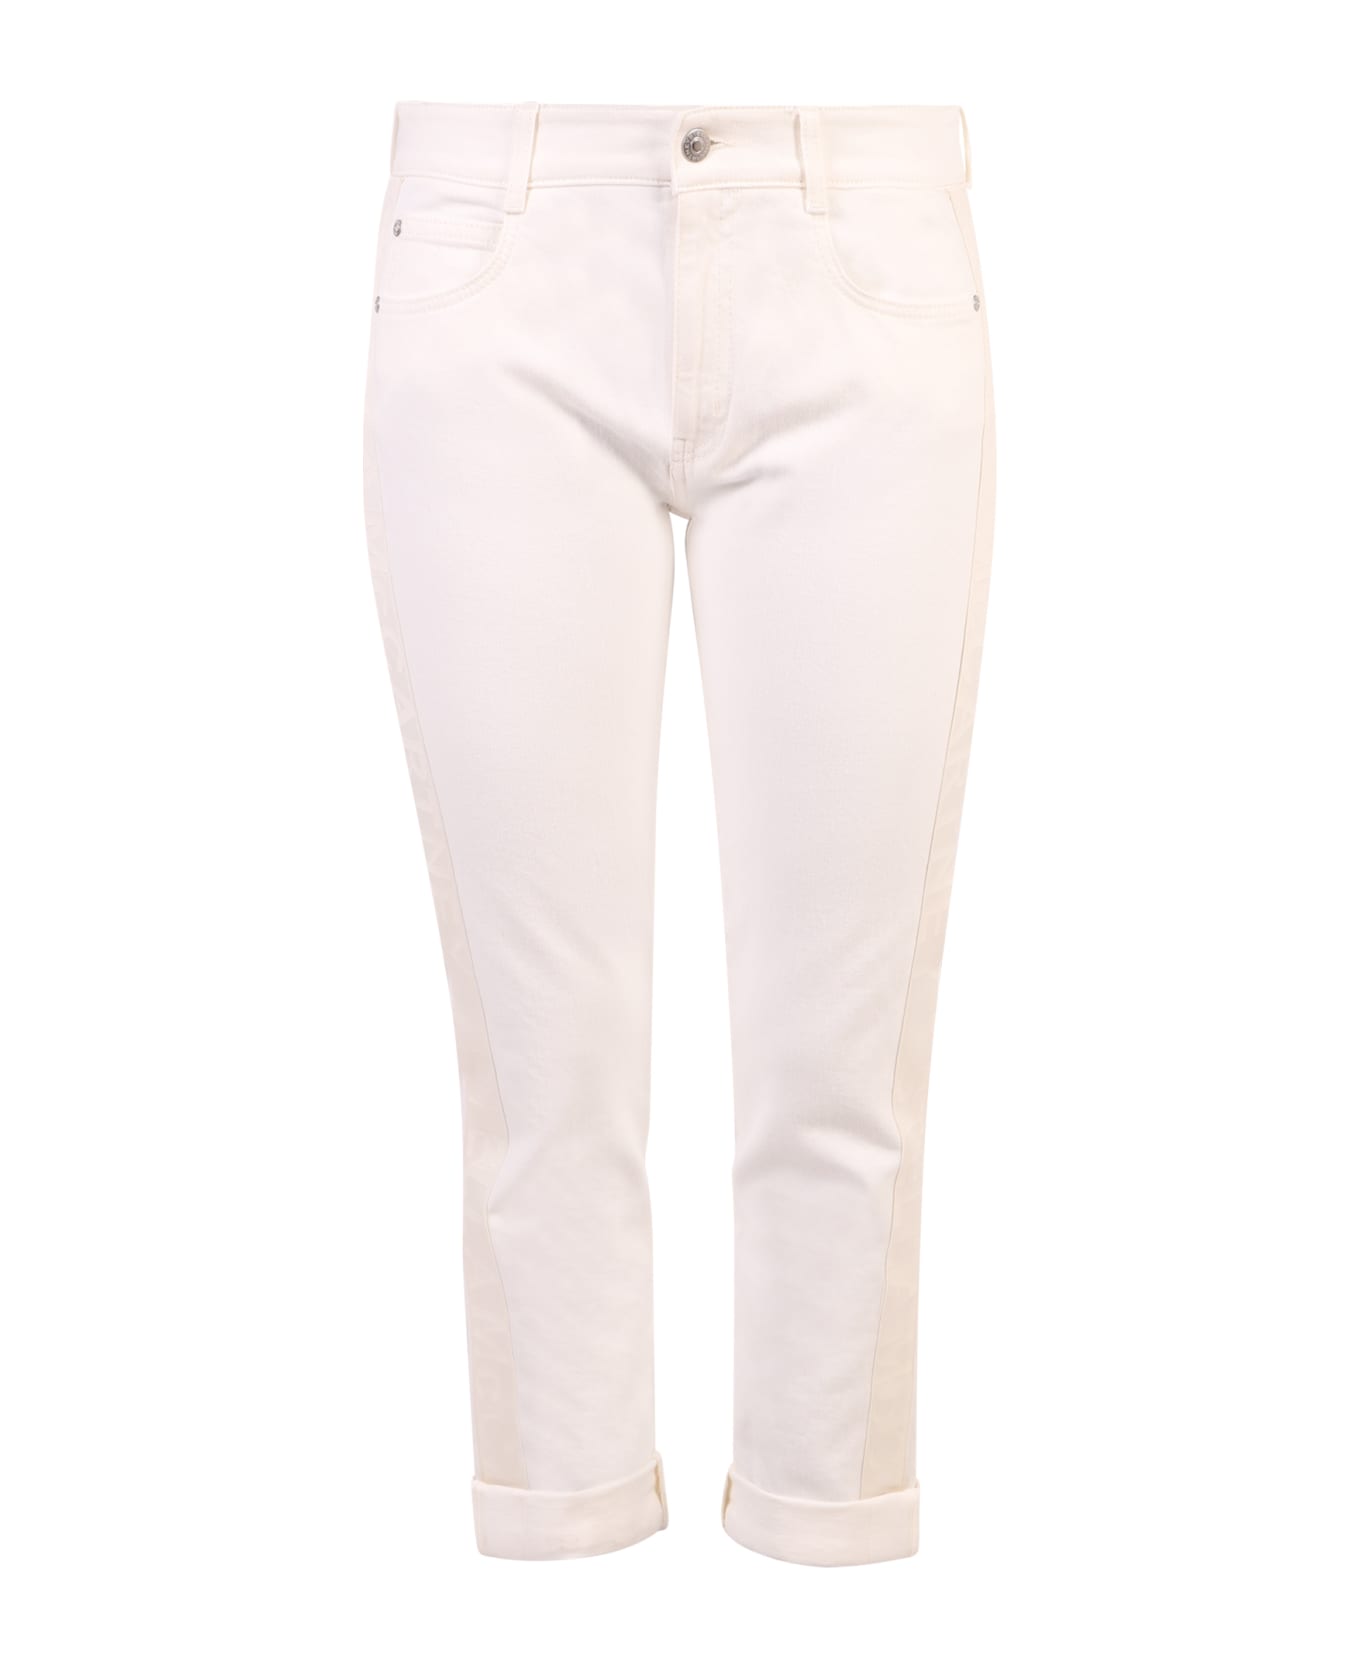 Stella McCartney Branded Jeans - Bianco ボトムス